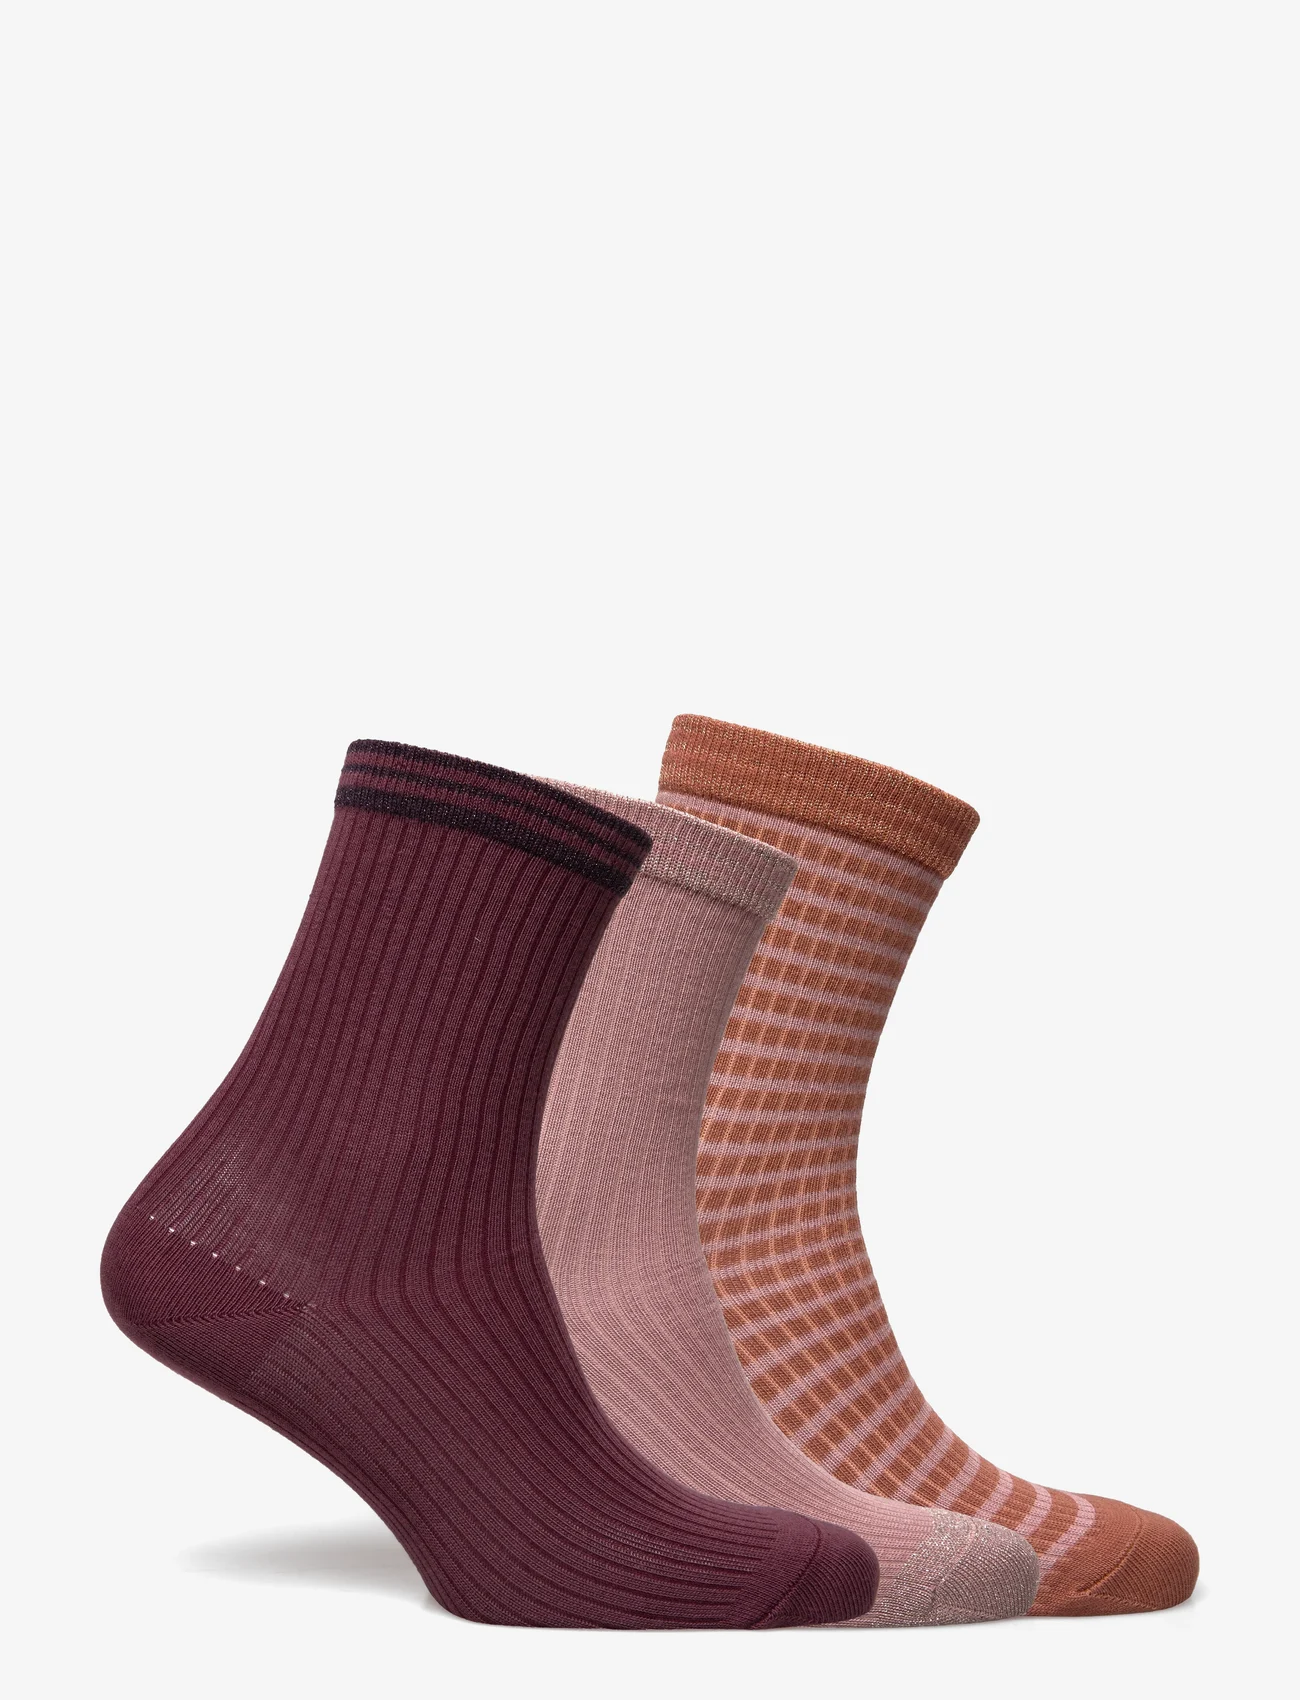 mp Denmark - Karen socks - 3-pack - mažiausios kainos - woodrose multi mix - 1